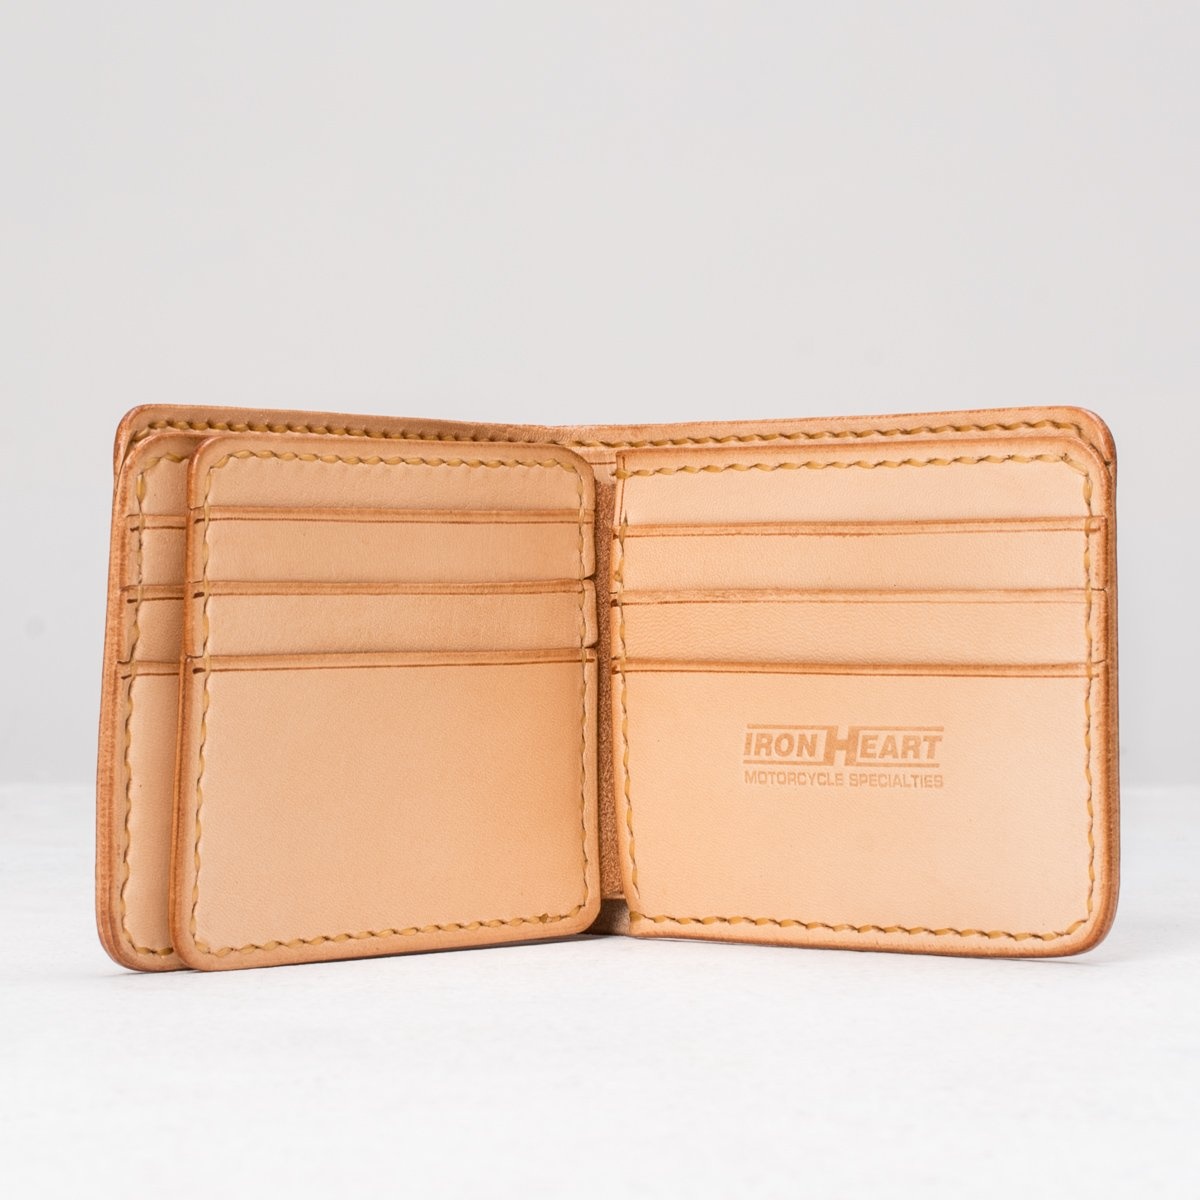 IHG-035 Calf Folding Wallet - Black or Tan - 2